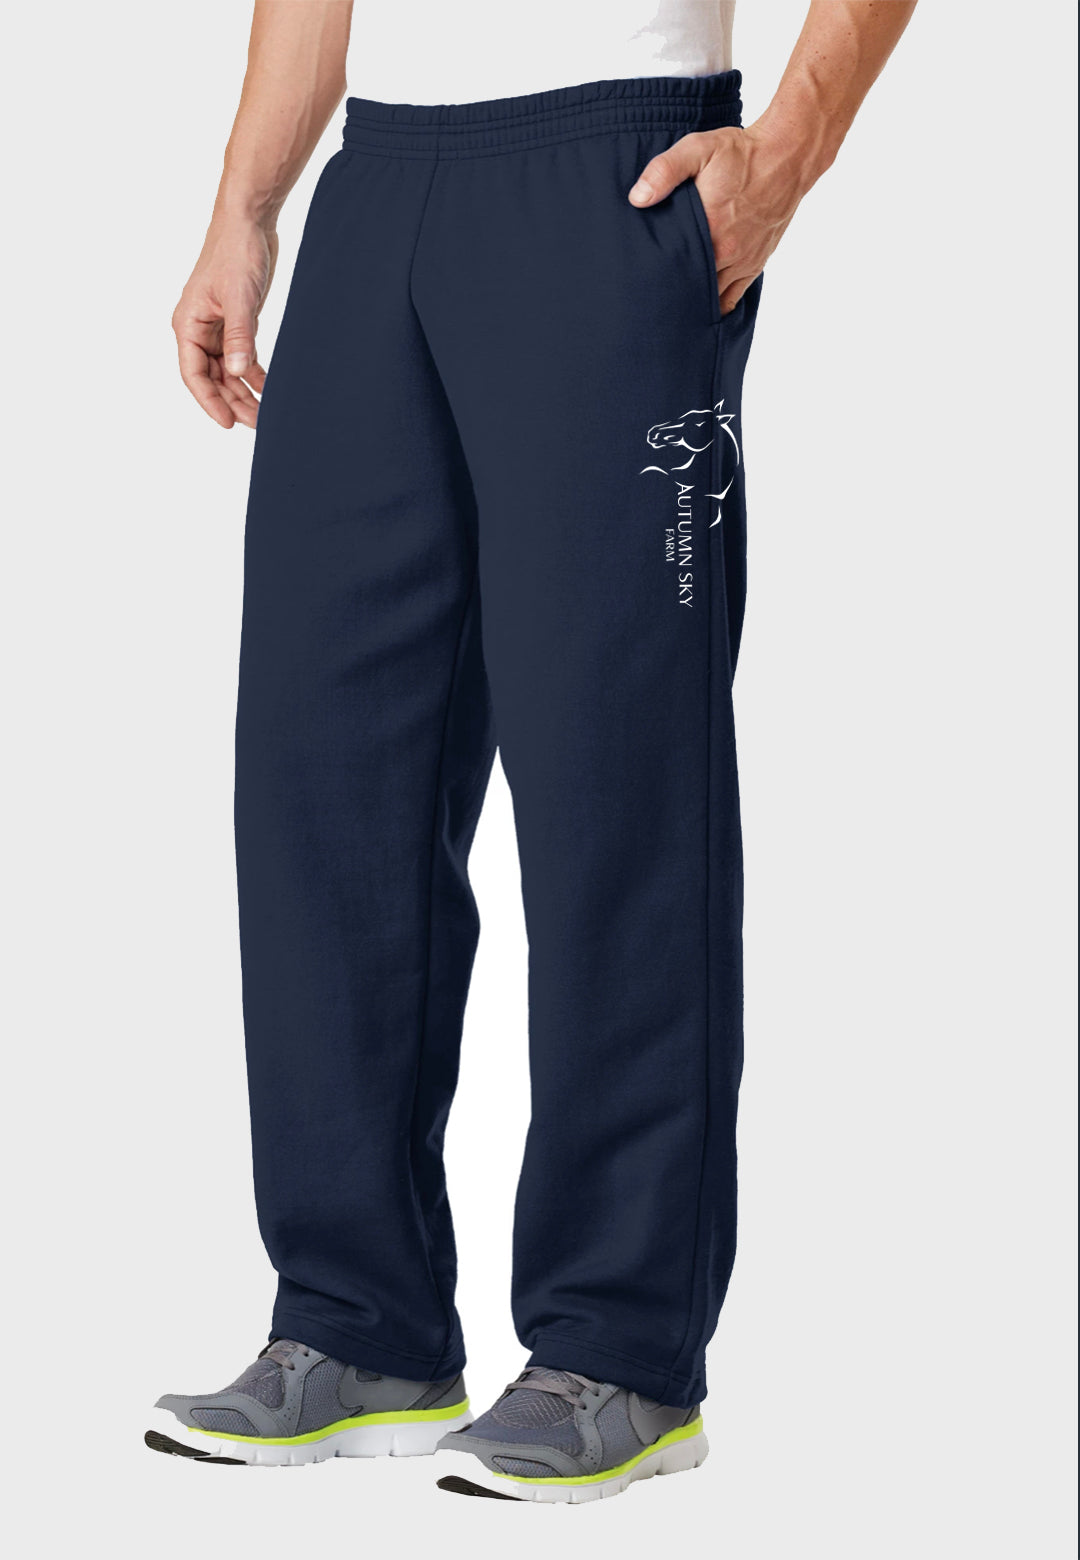 Autumn Sky Farm Core Fleece Sweatpant with Pockets (Unisex) - Adult + Youth Sizes